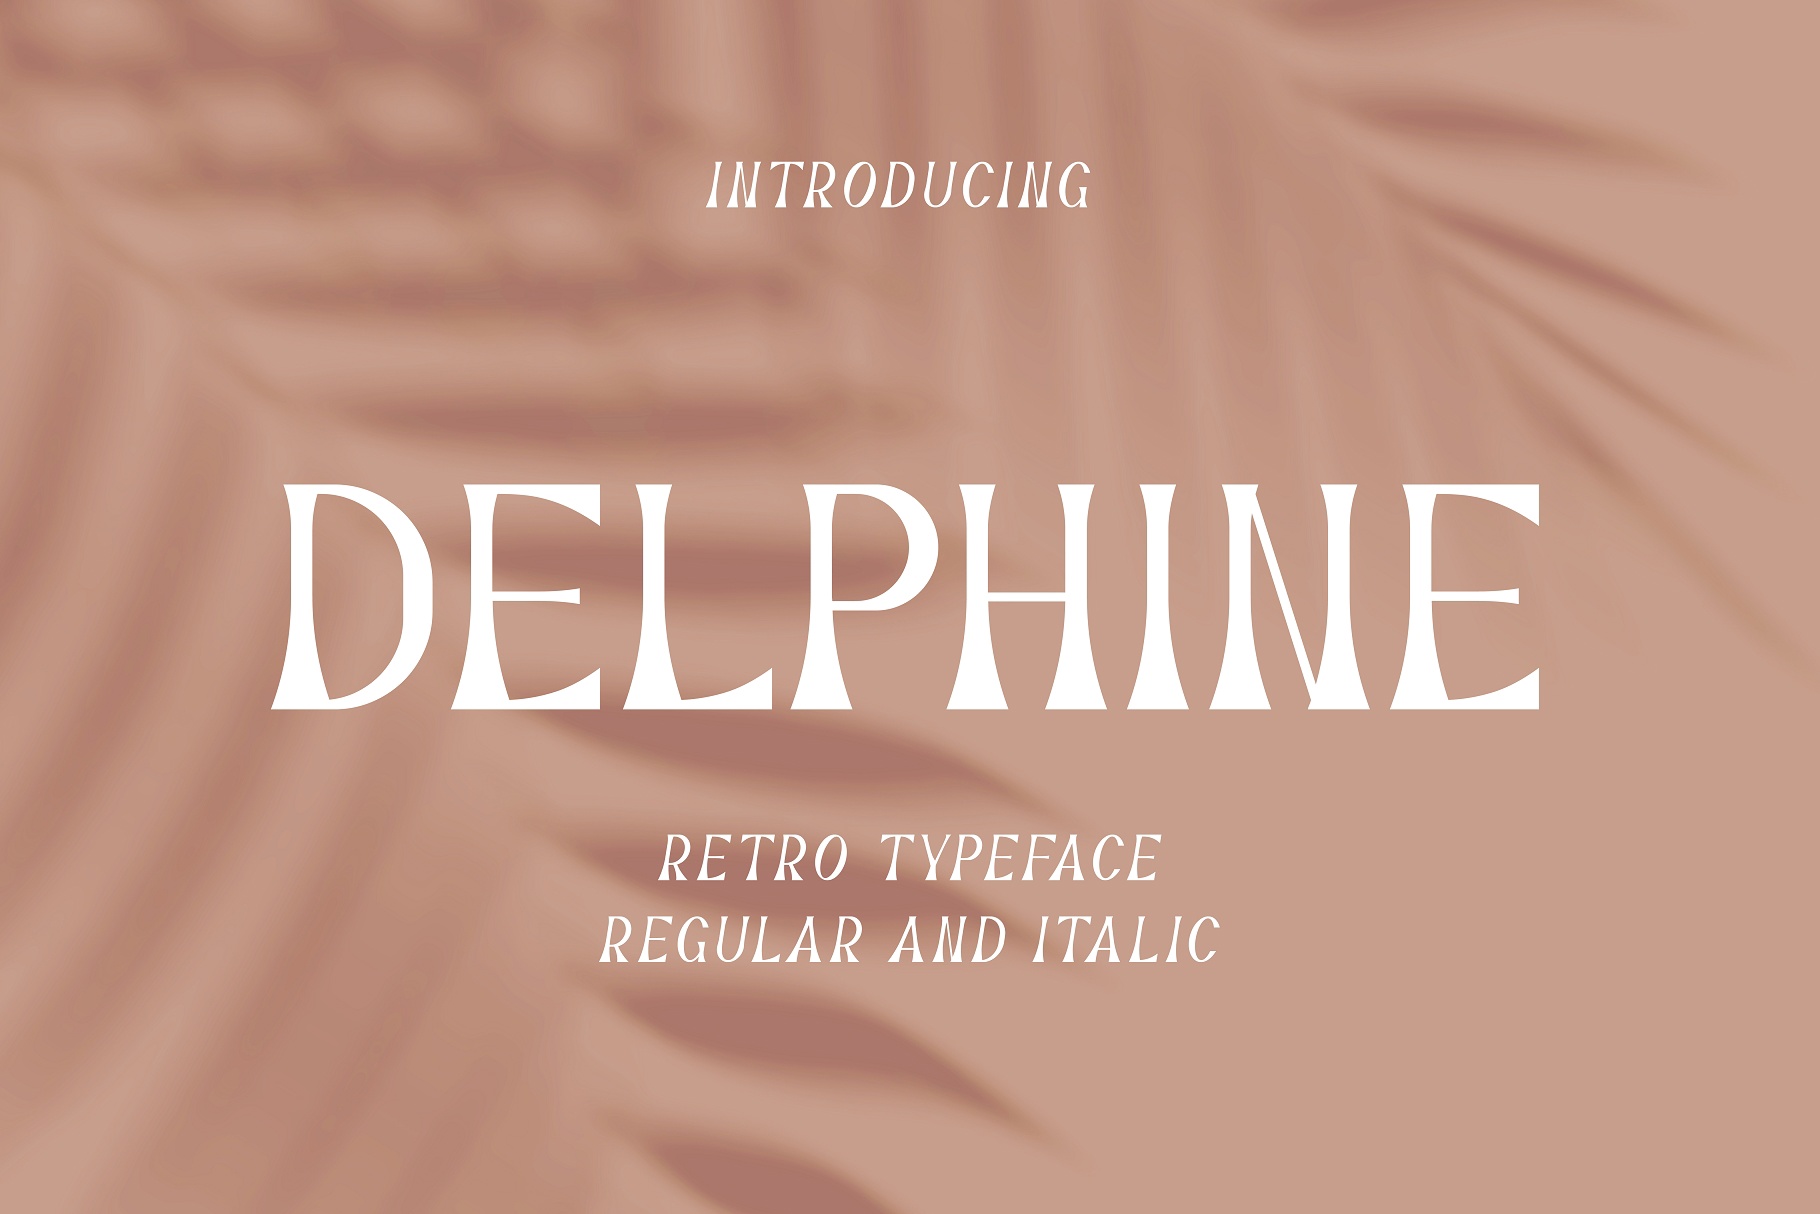 Police Delphine